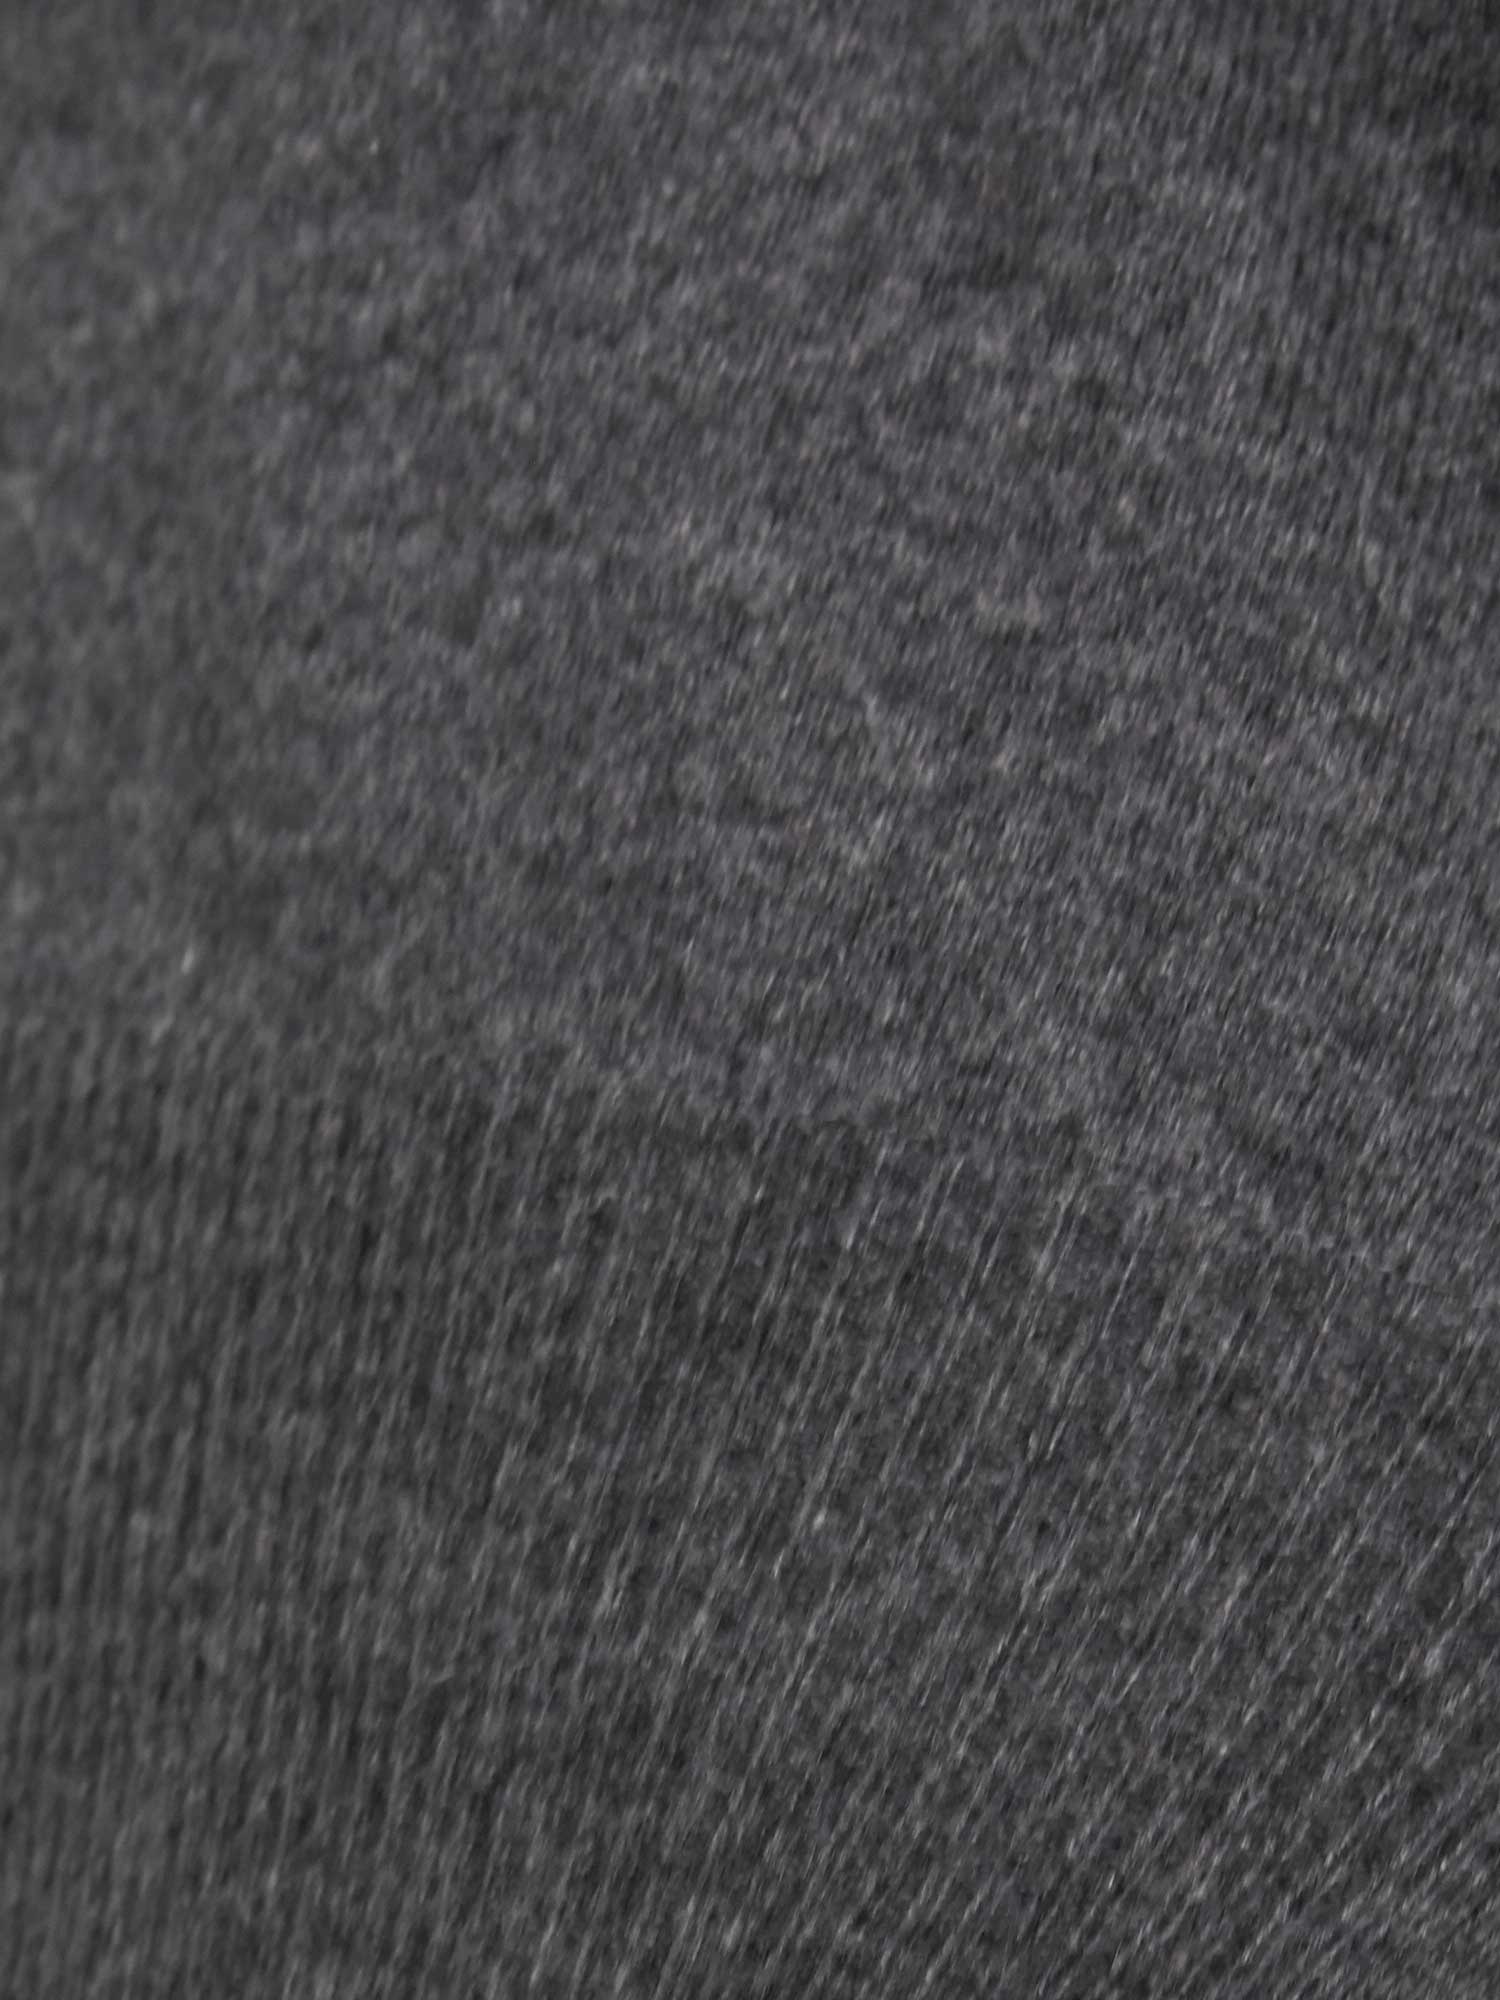 Dark grey lace layered v-neck sweater close up 2